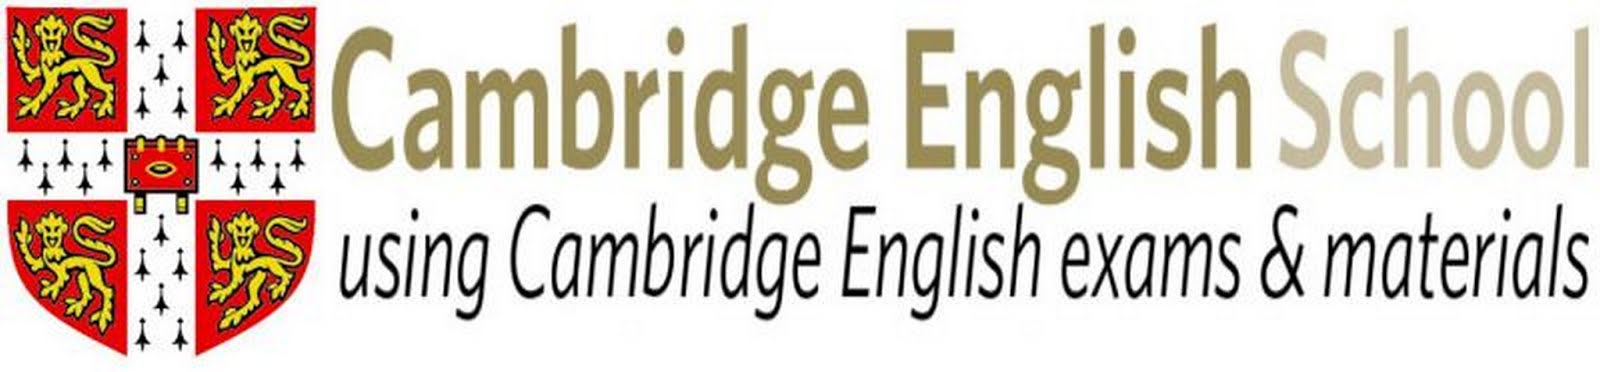 Cambridge English School